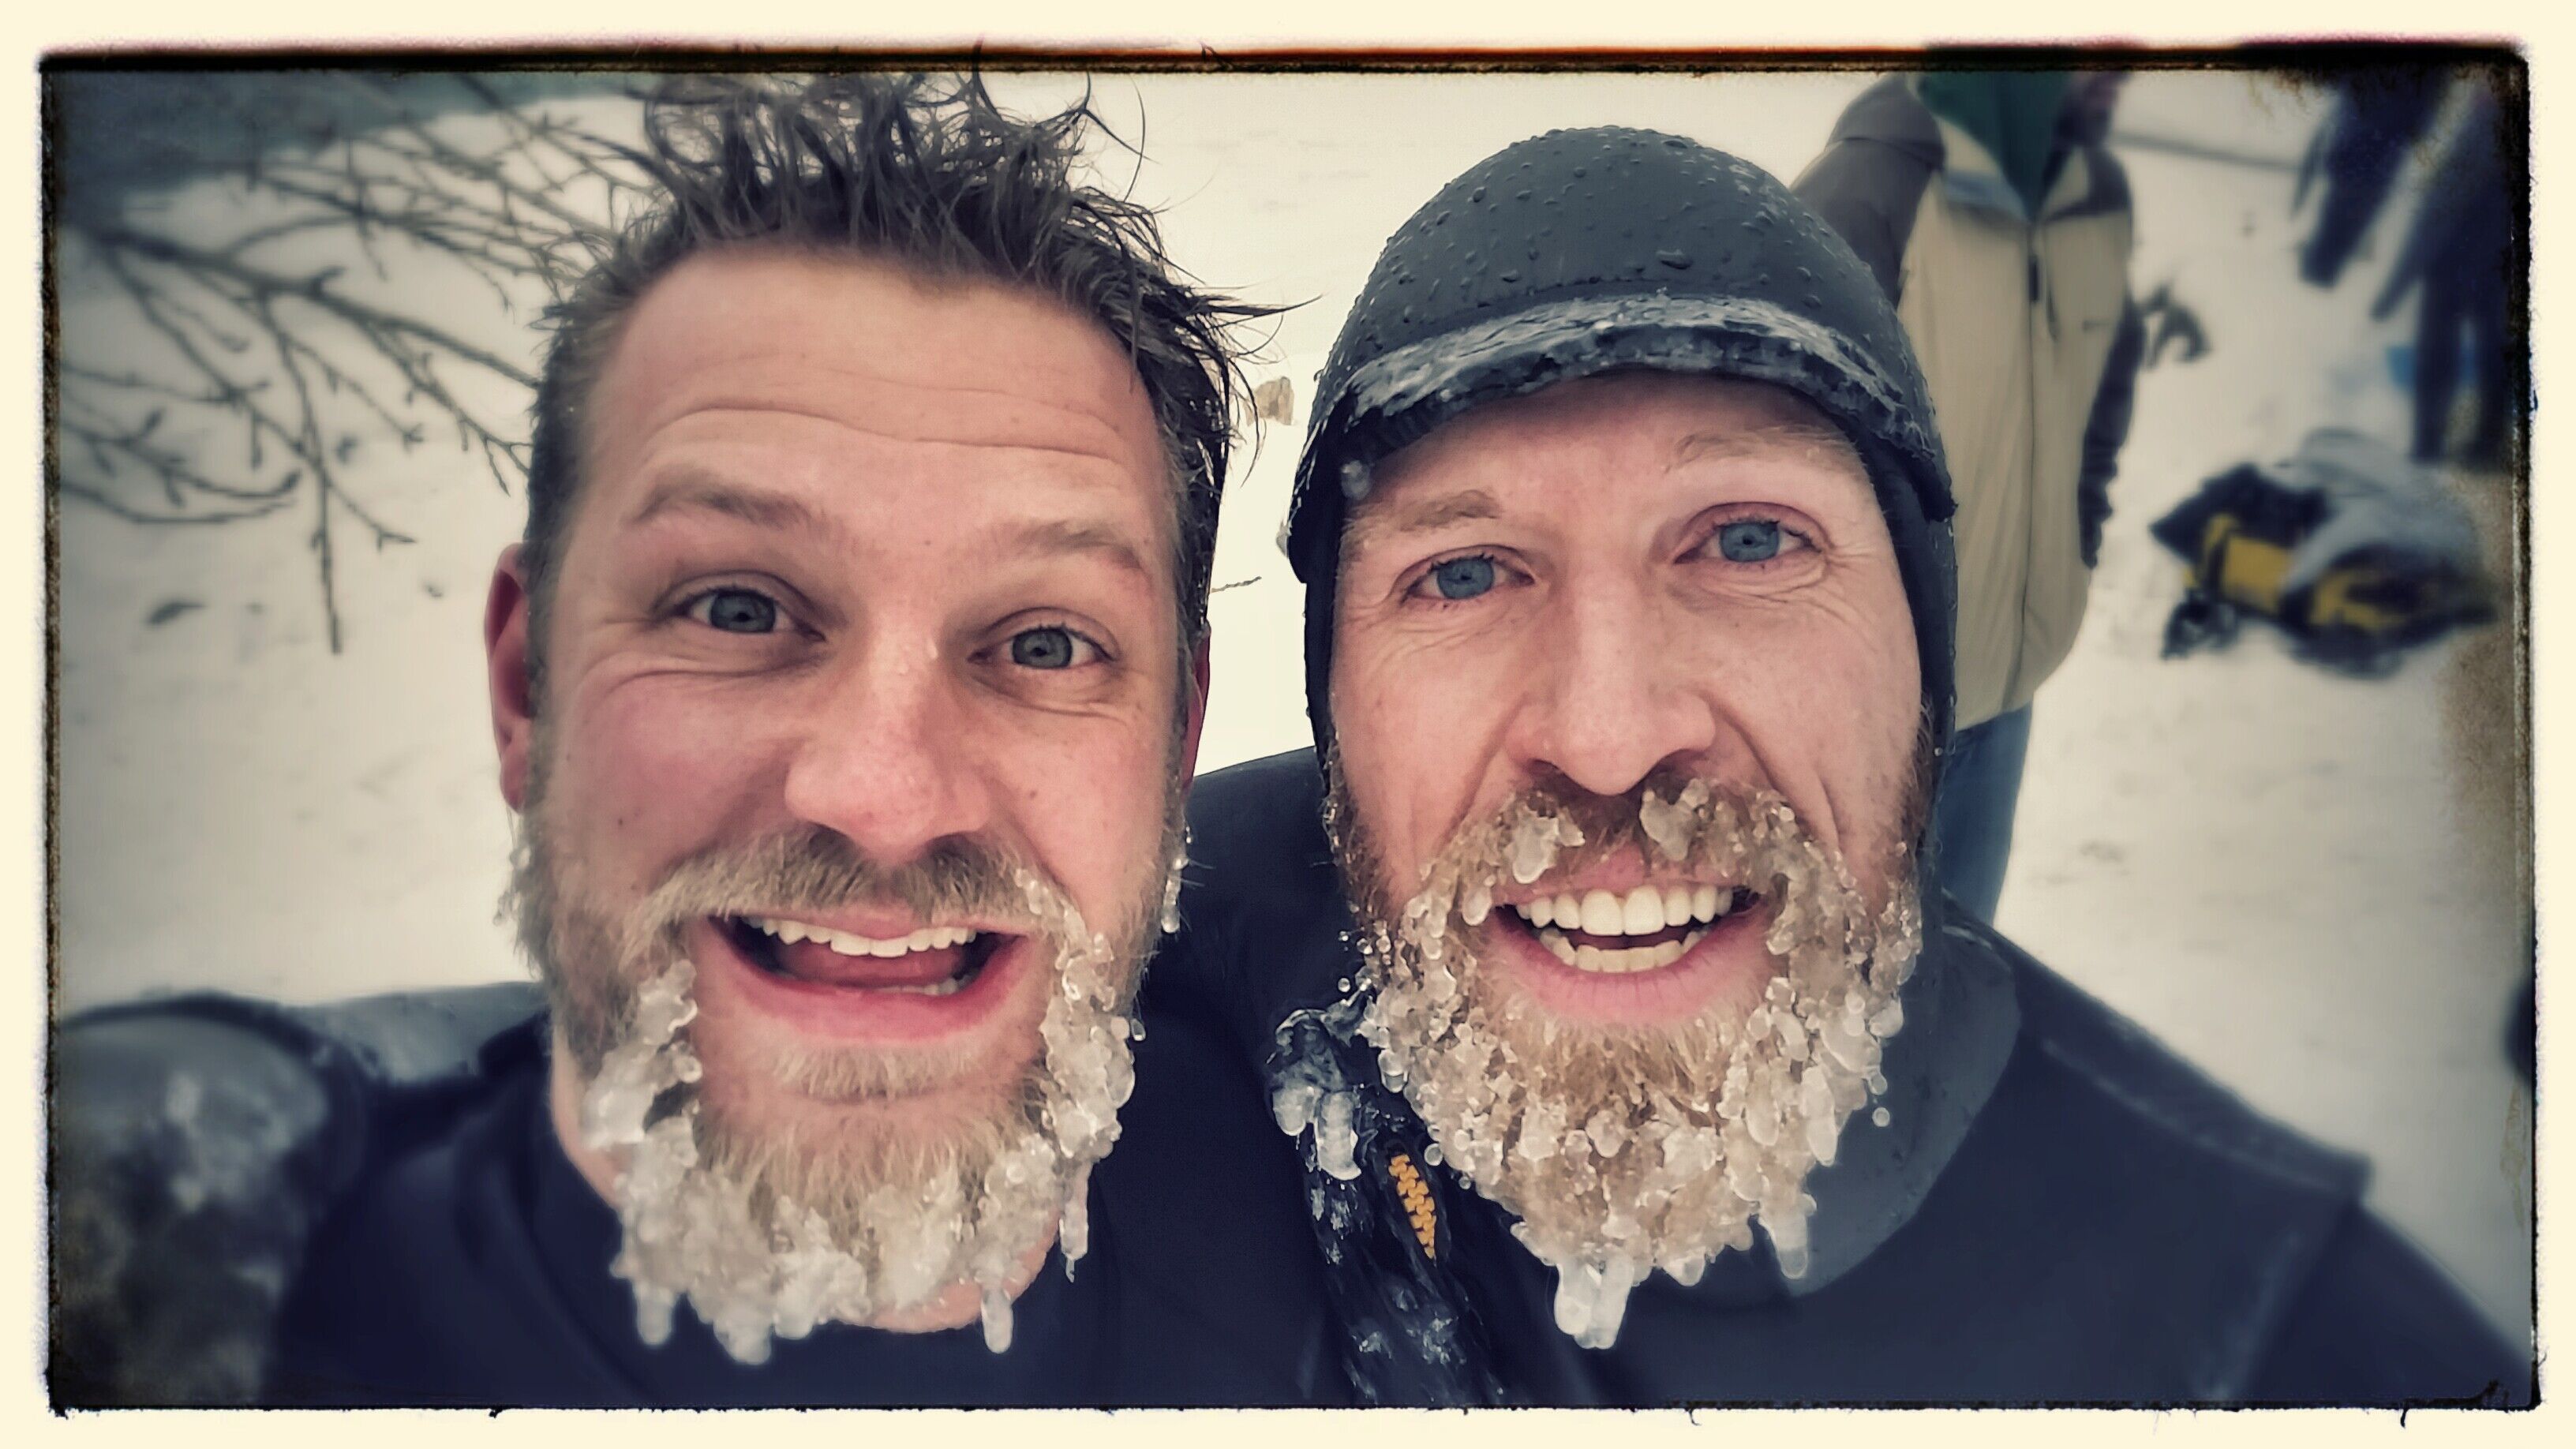 010 – Quinlan & Adam Baranec with Winter Beards (Quinlan)